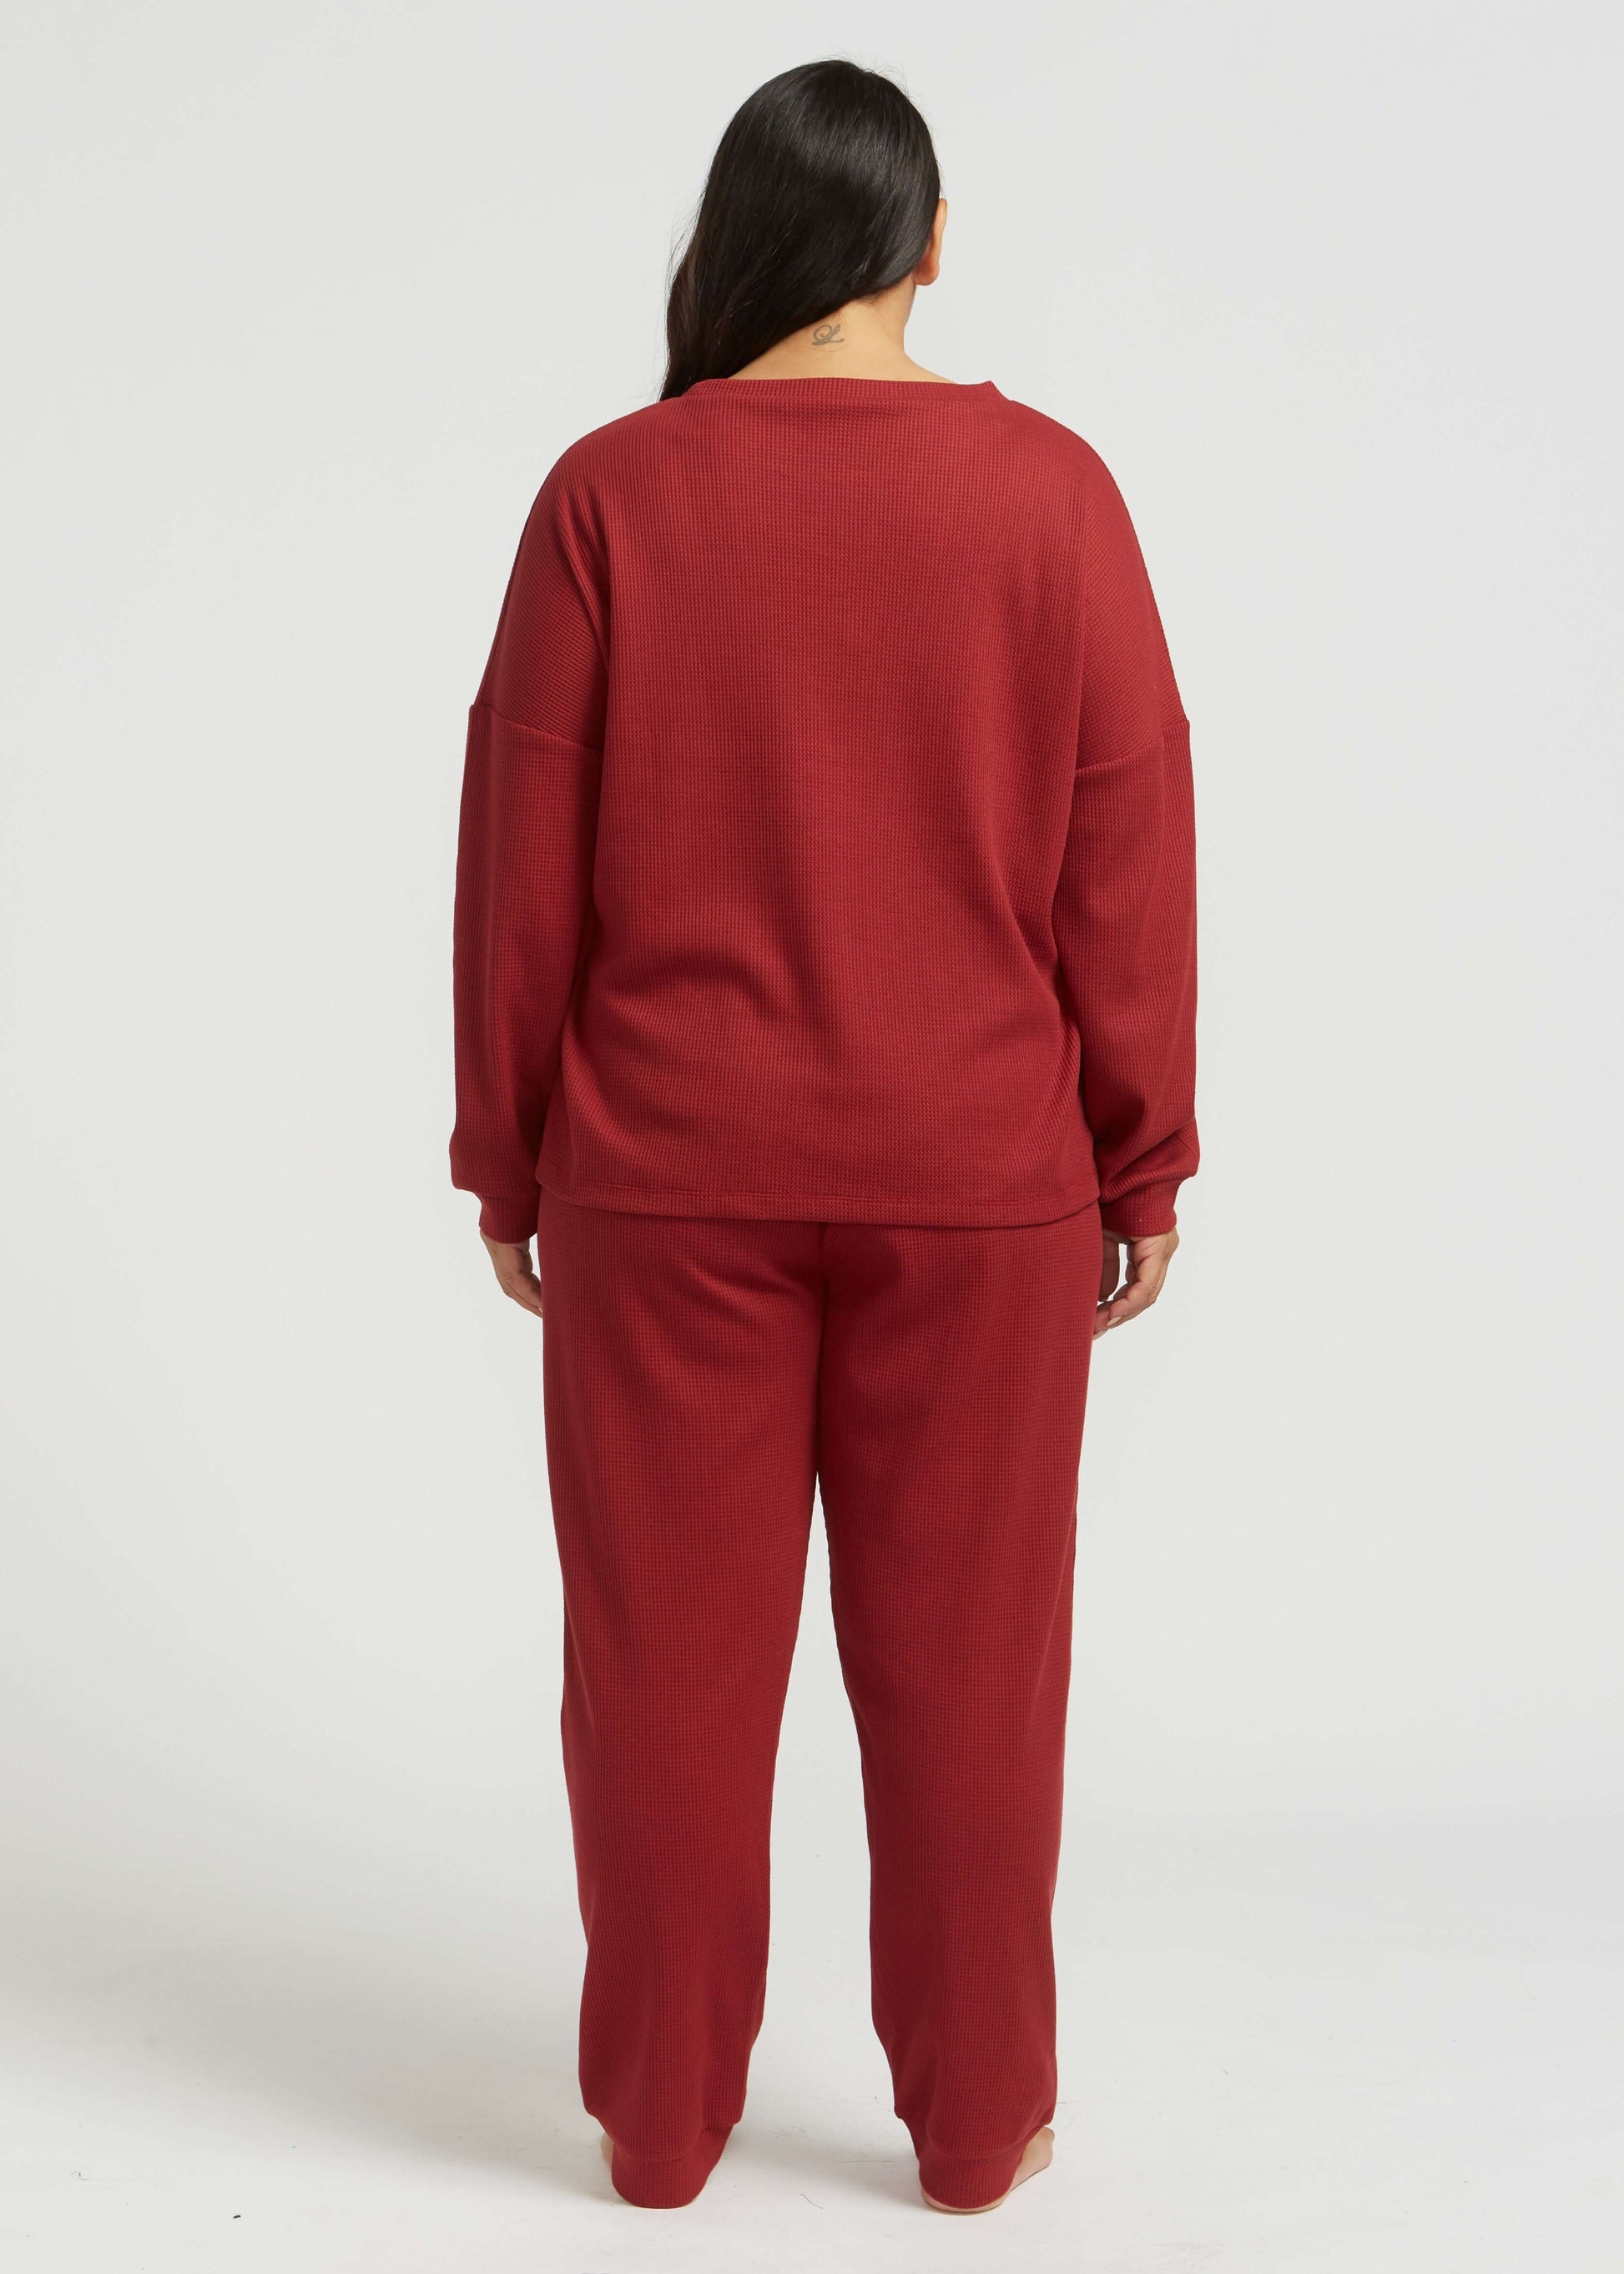 'Waffles At Midnight' Pyjama Set - Wine Sleepwear & Loungewear Berkanan Official 